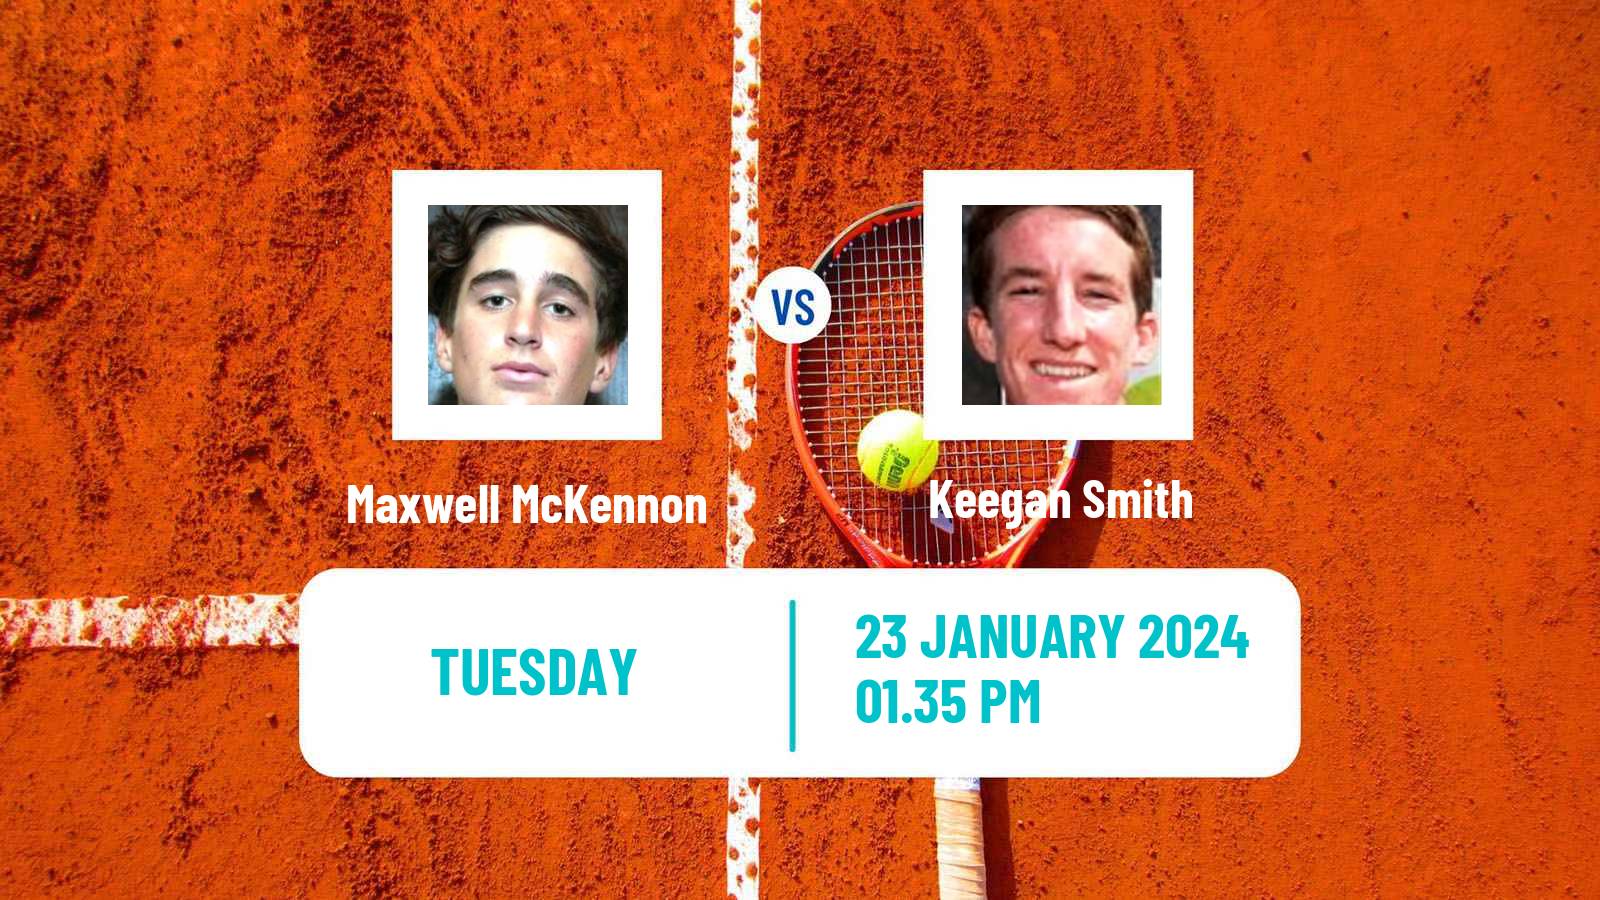 Tennis Indian Wells 2 Challenger Men Maxwell McKennon - Keegan Smith